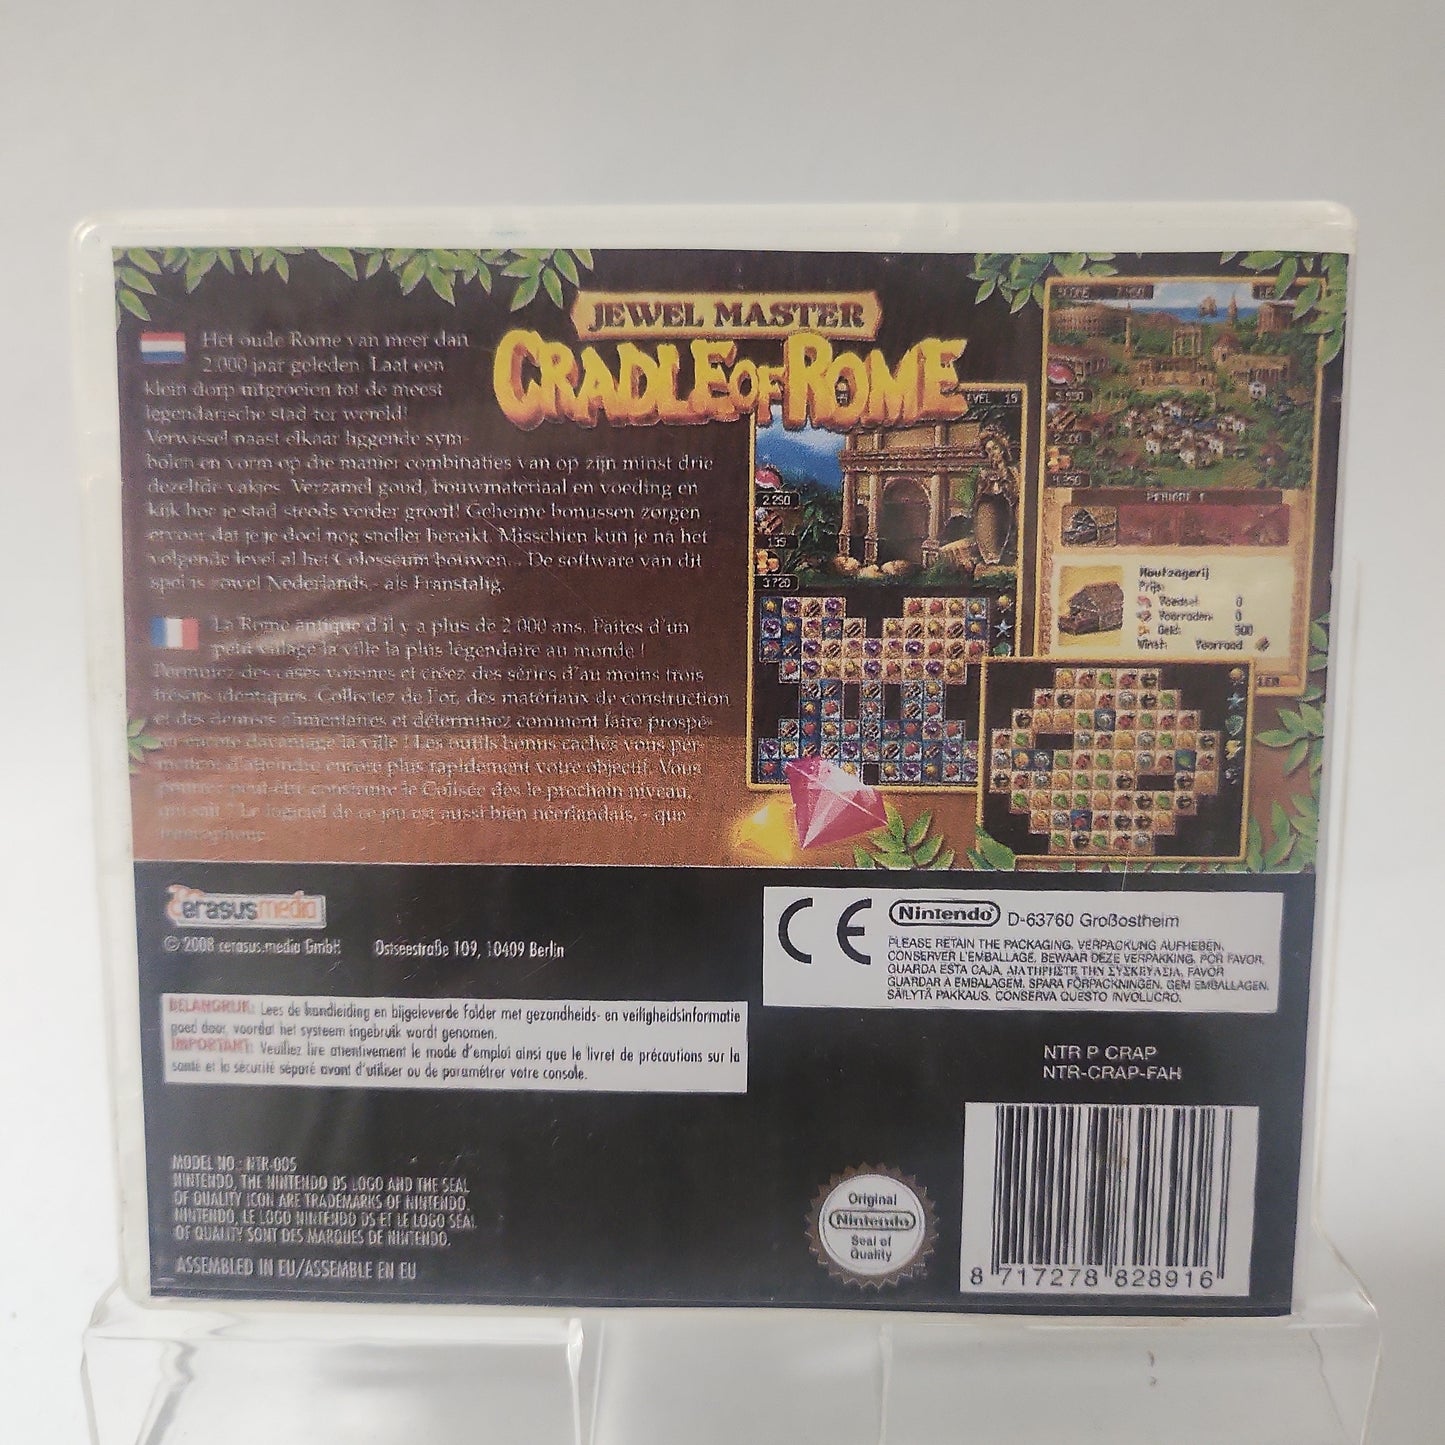 Jewel Master Cradle of Rome (Copy Cover) Nintendo DS